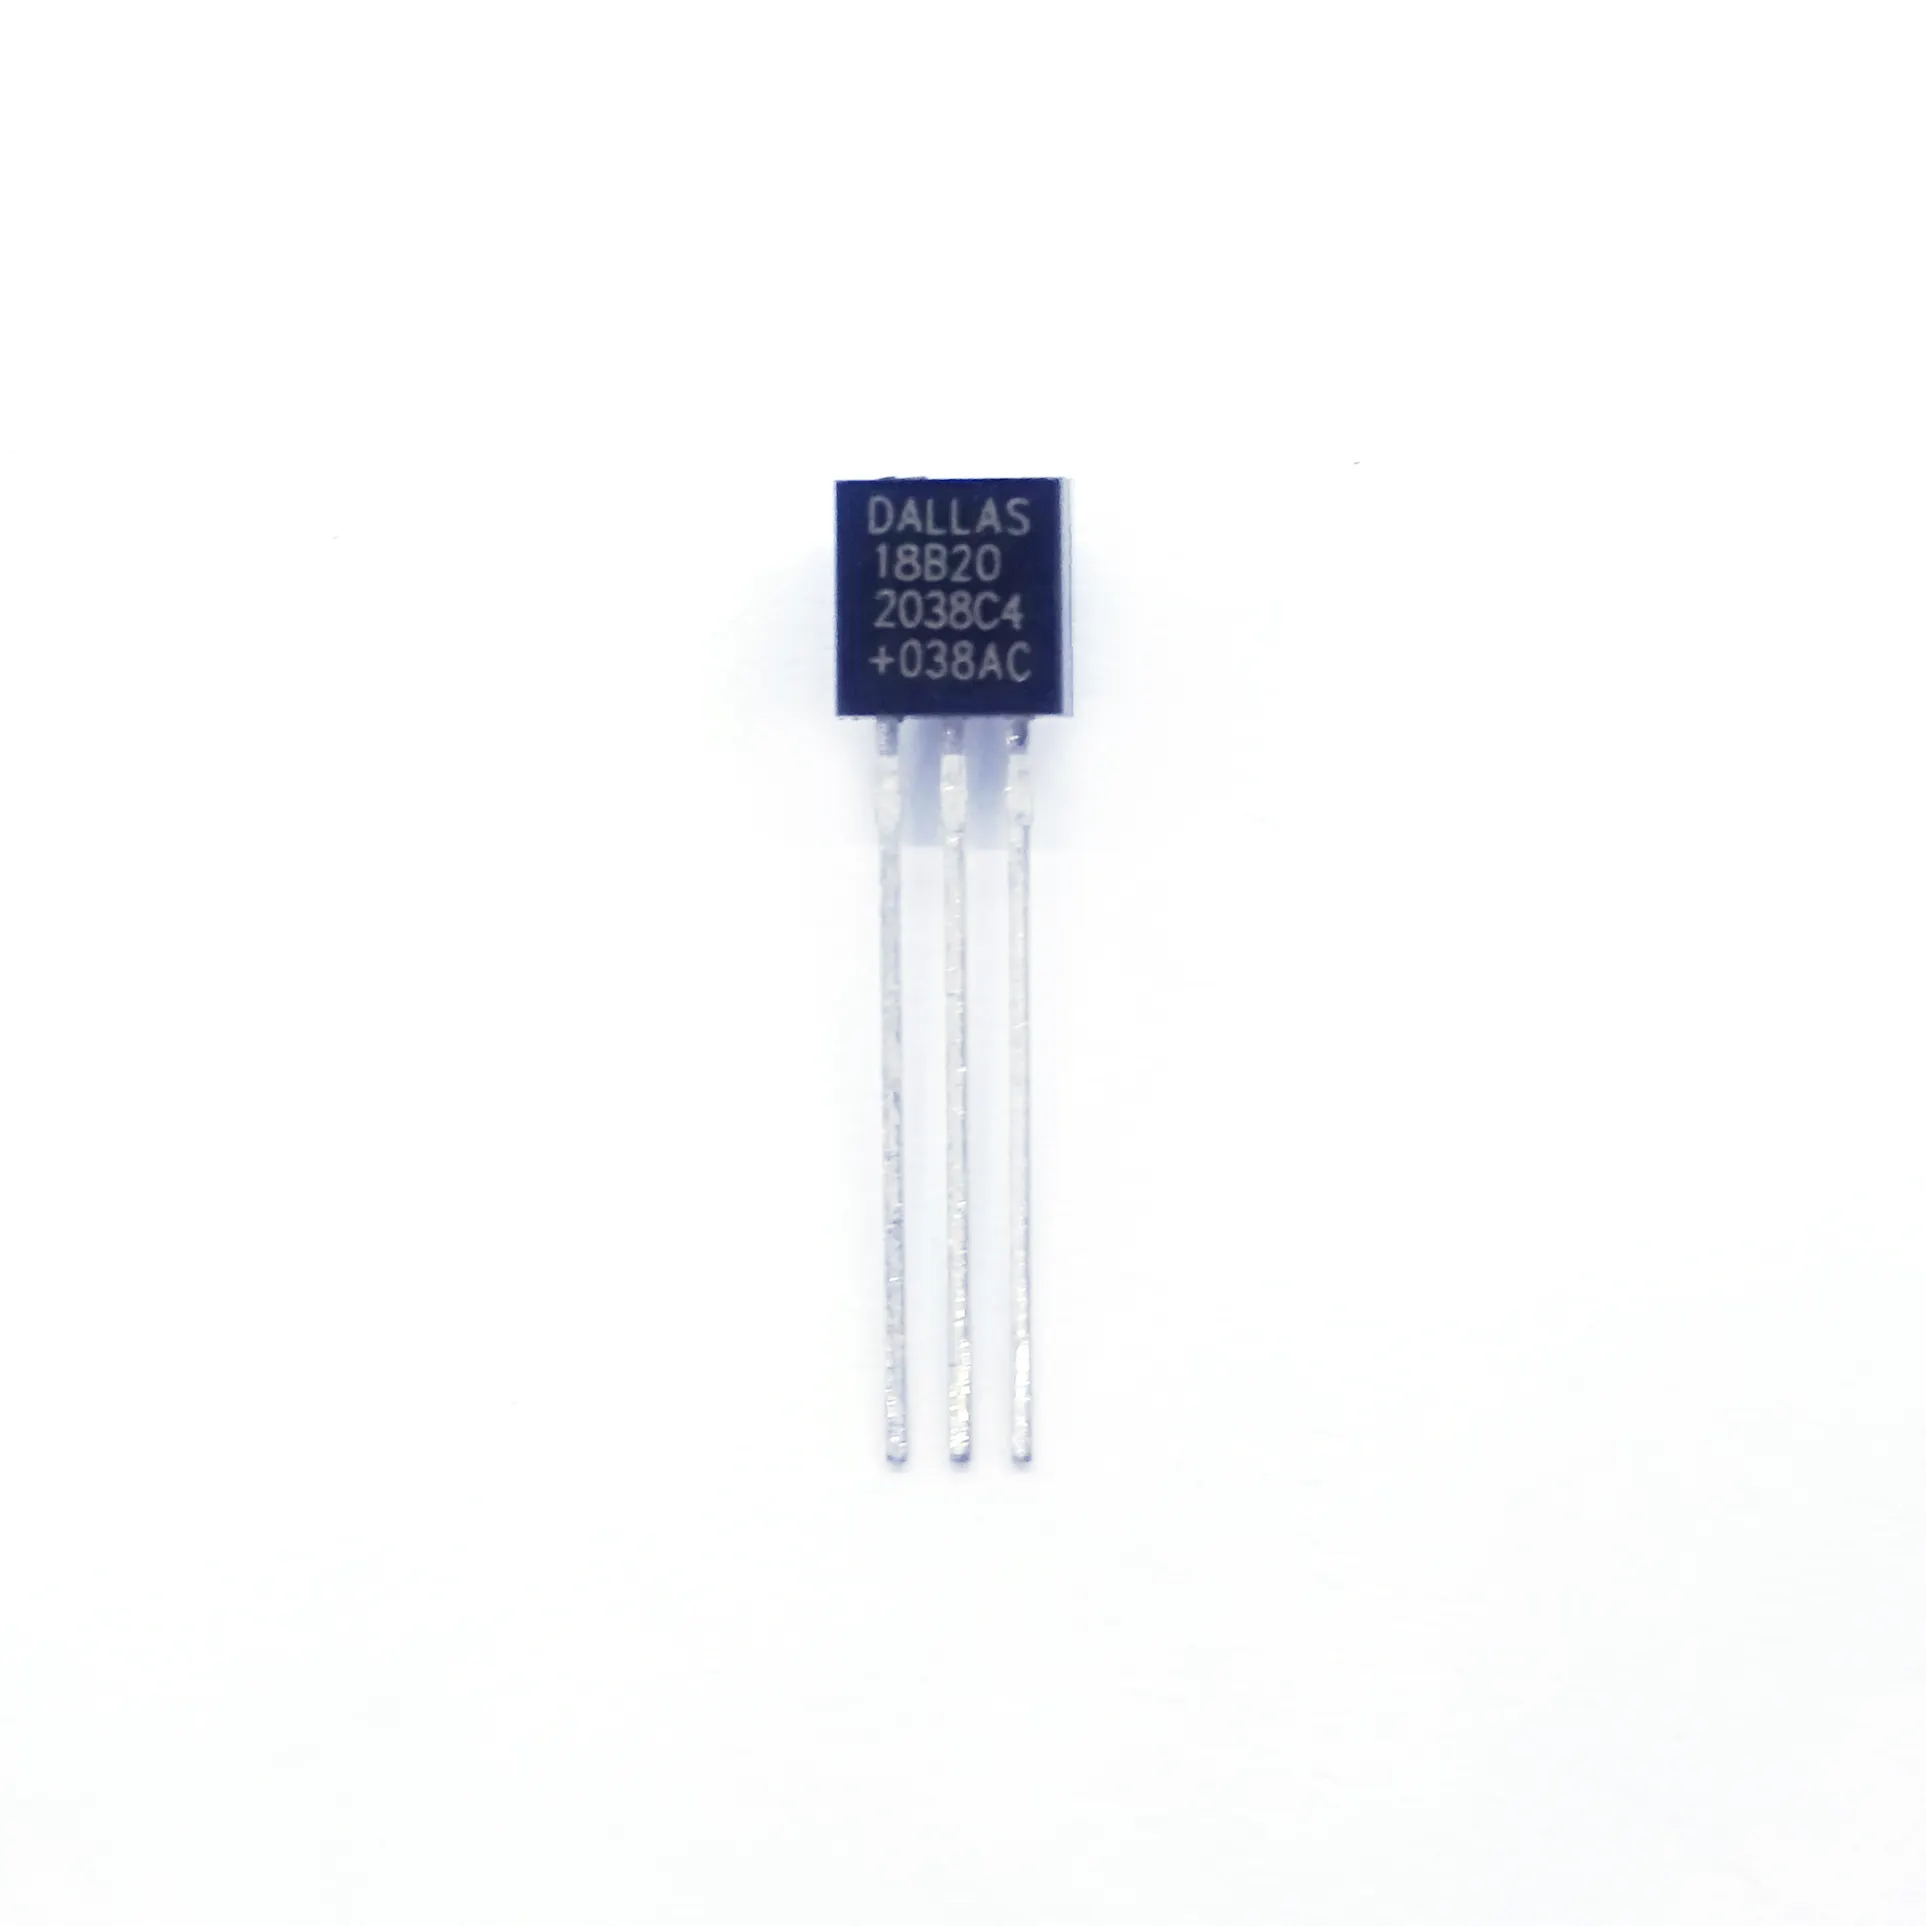 Brand new Original in stock hot sale chip Temperature Sensors Board Mount Temperature Sensors TO-92 DS18B20+ integrated circuit